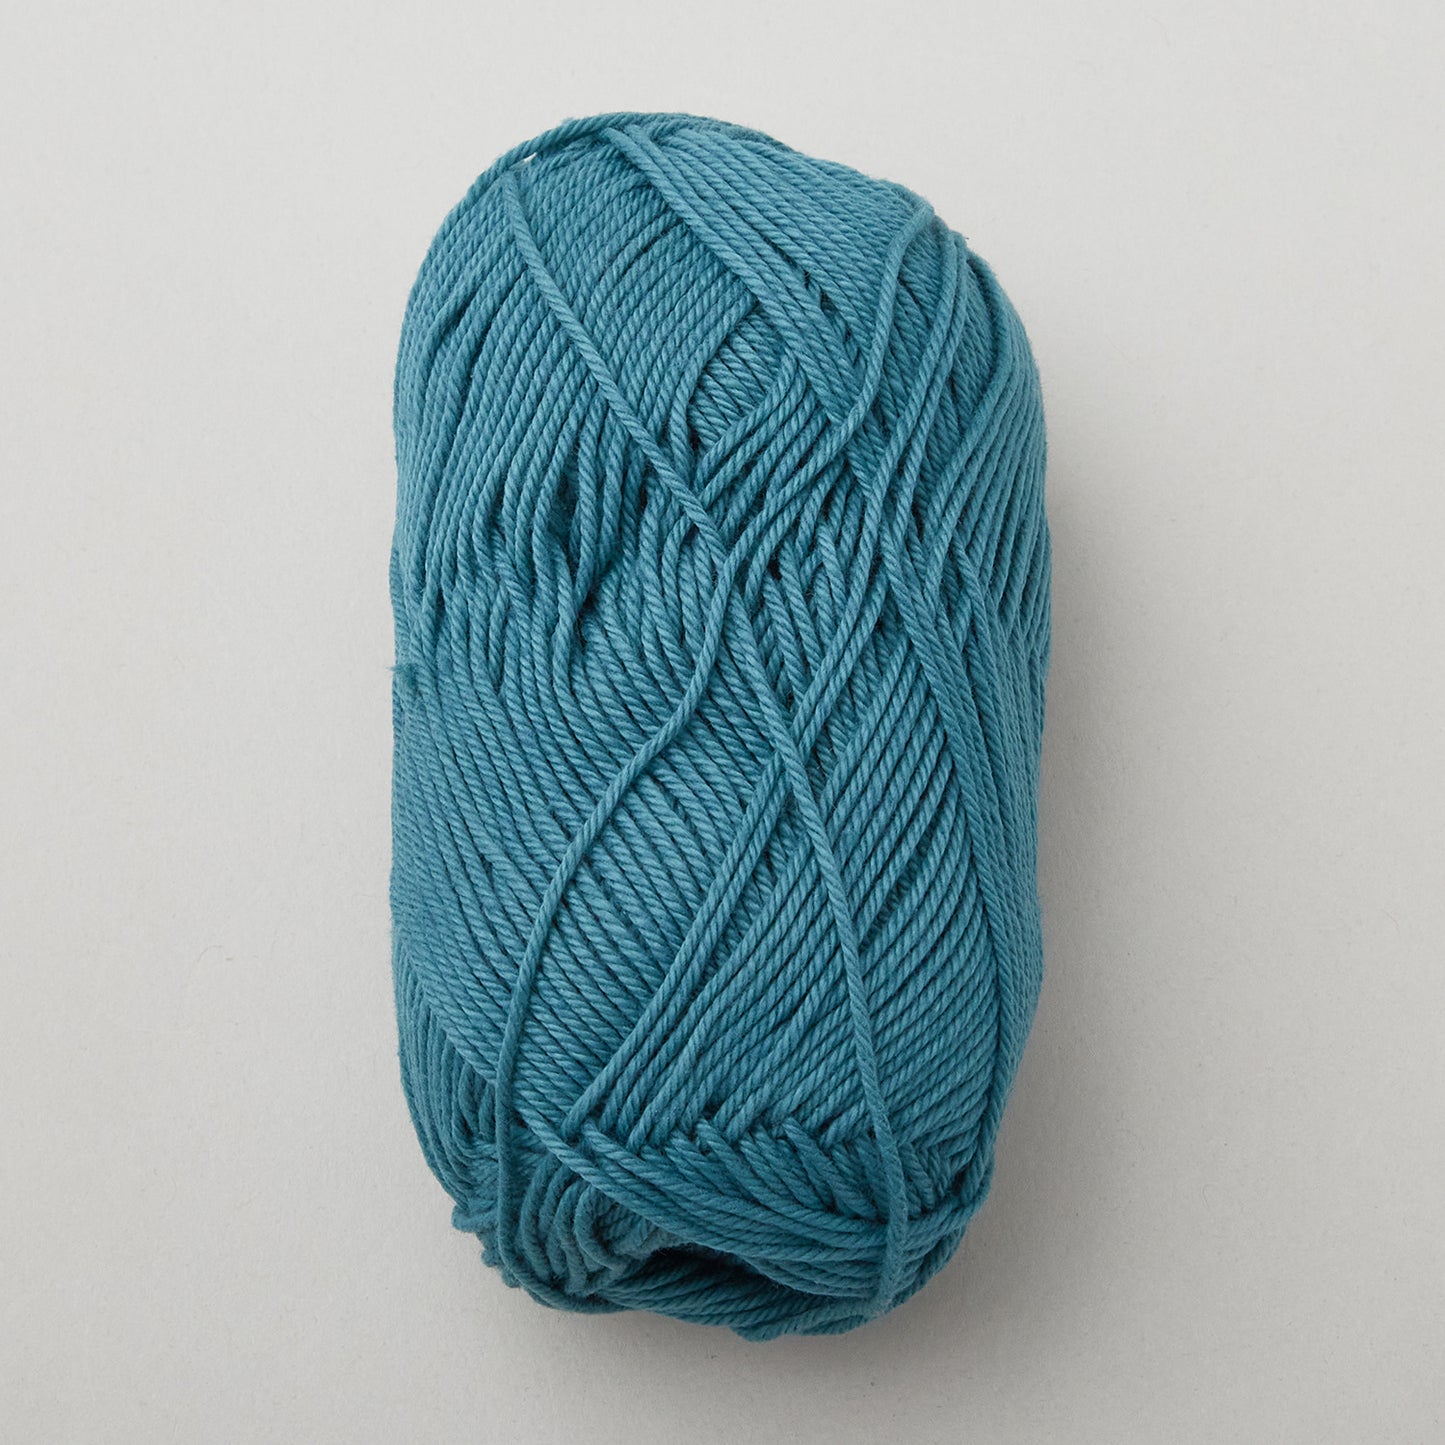 Lori Holt Chunky Crochet Thread Lagoon (32991) Alternative View #1